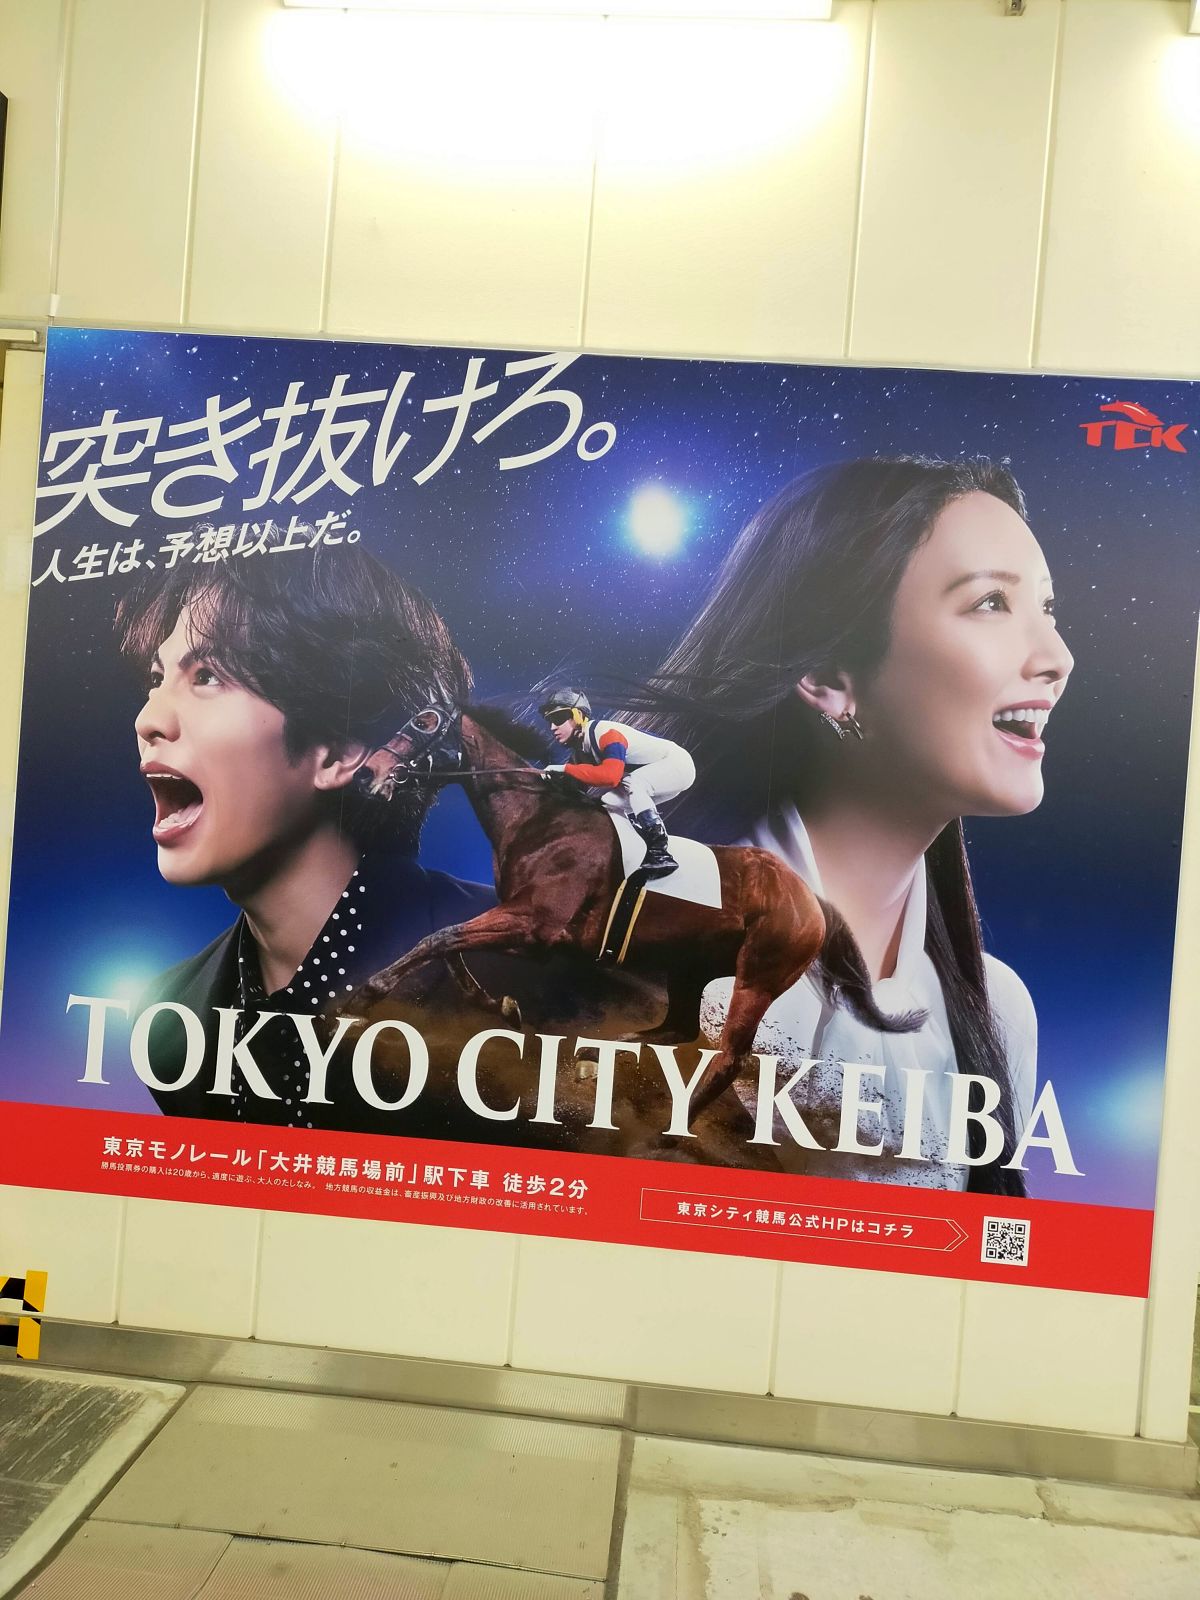 TOKYO CITY KEIBA